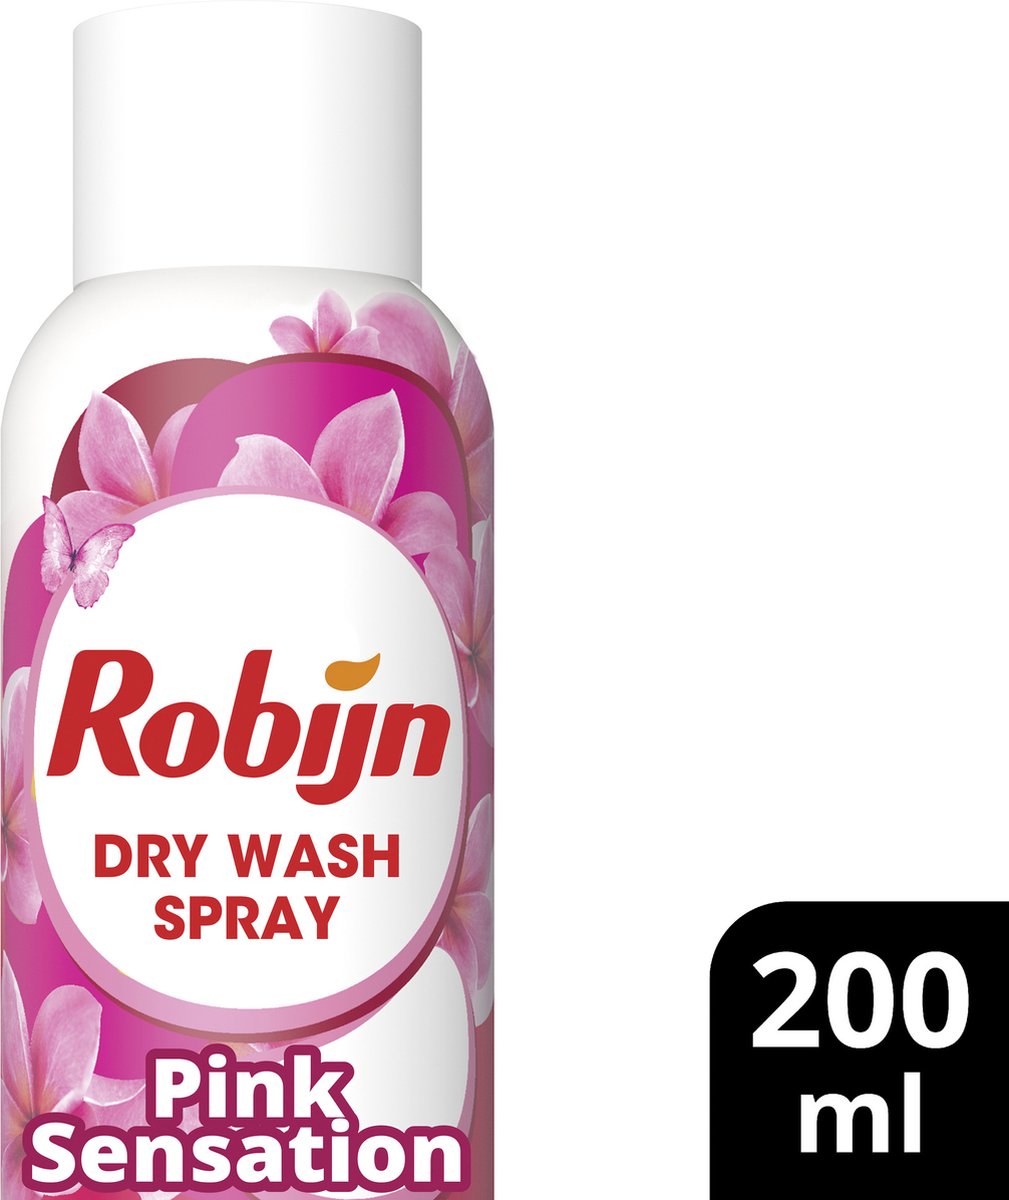 Robijn Pink Sensation Dry Wash Spray 200 ml - Robijn